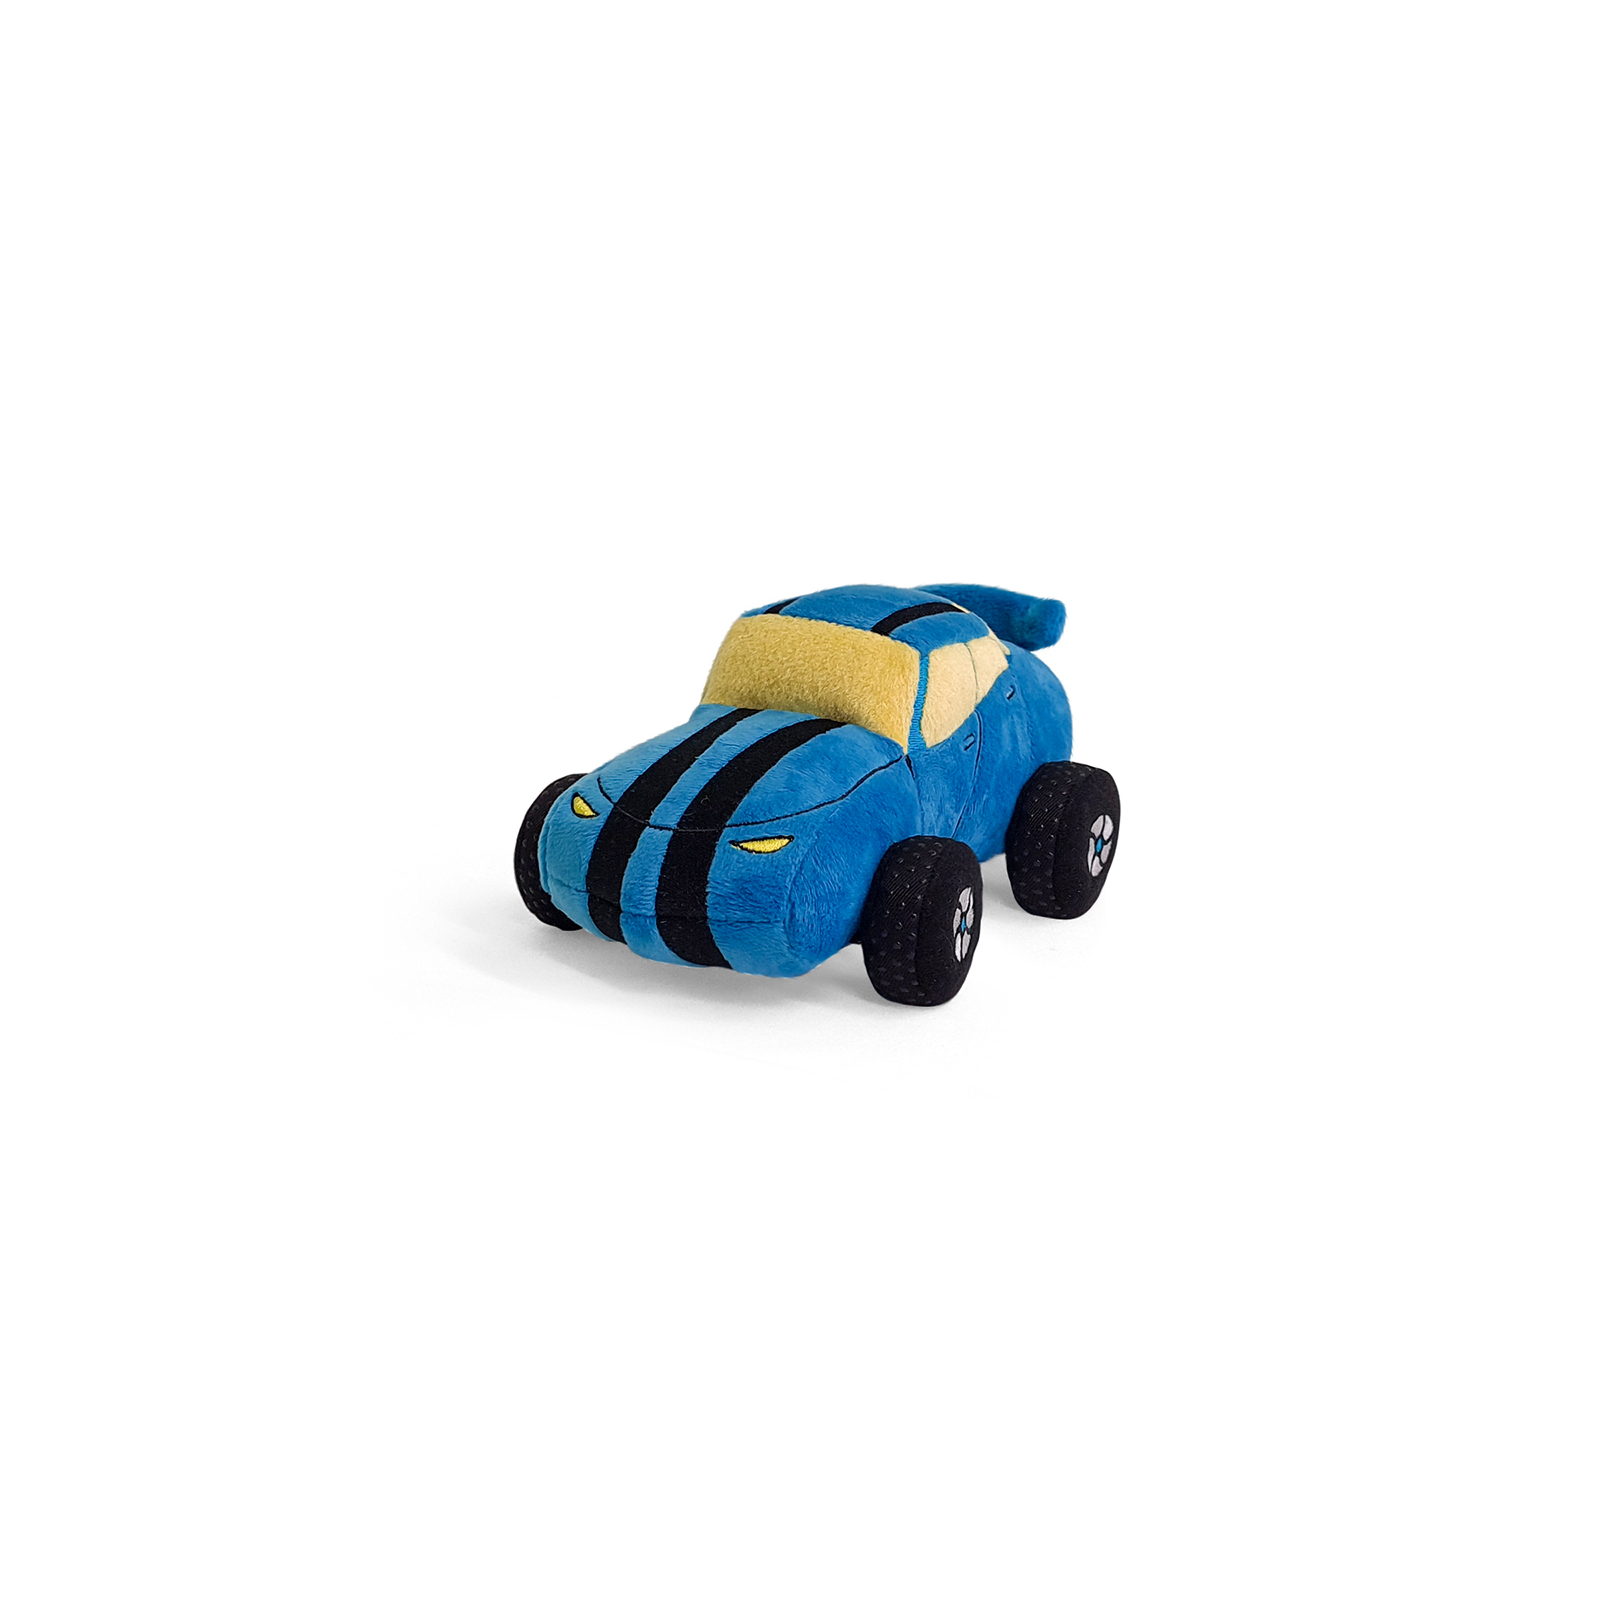 М'яка іграшка WP Merchandise Машинка "Ми з України" 20,5 см (FWPCAR22BLYELLOW0)